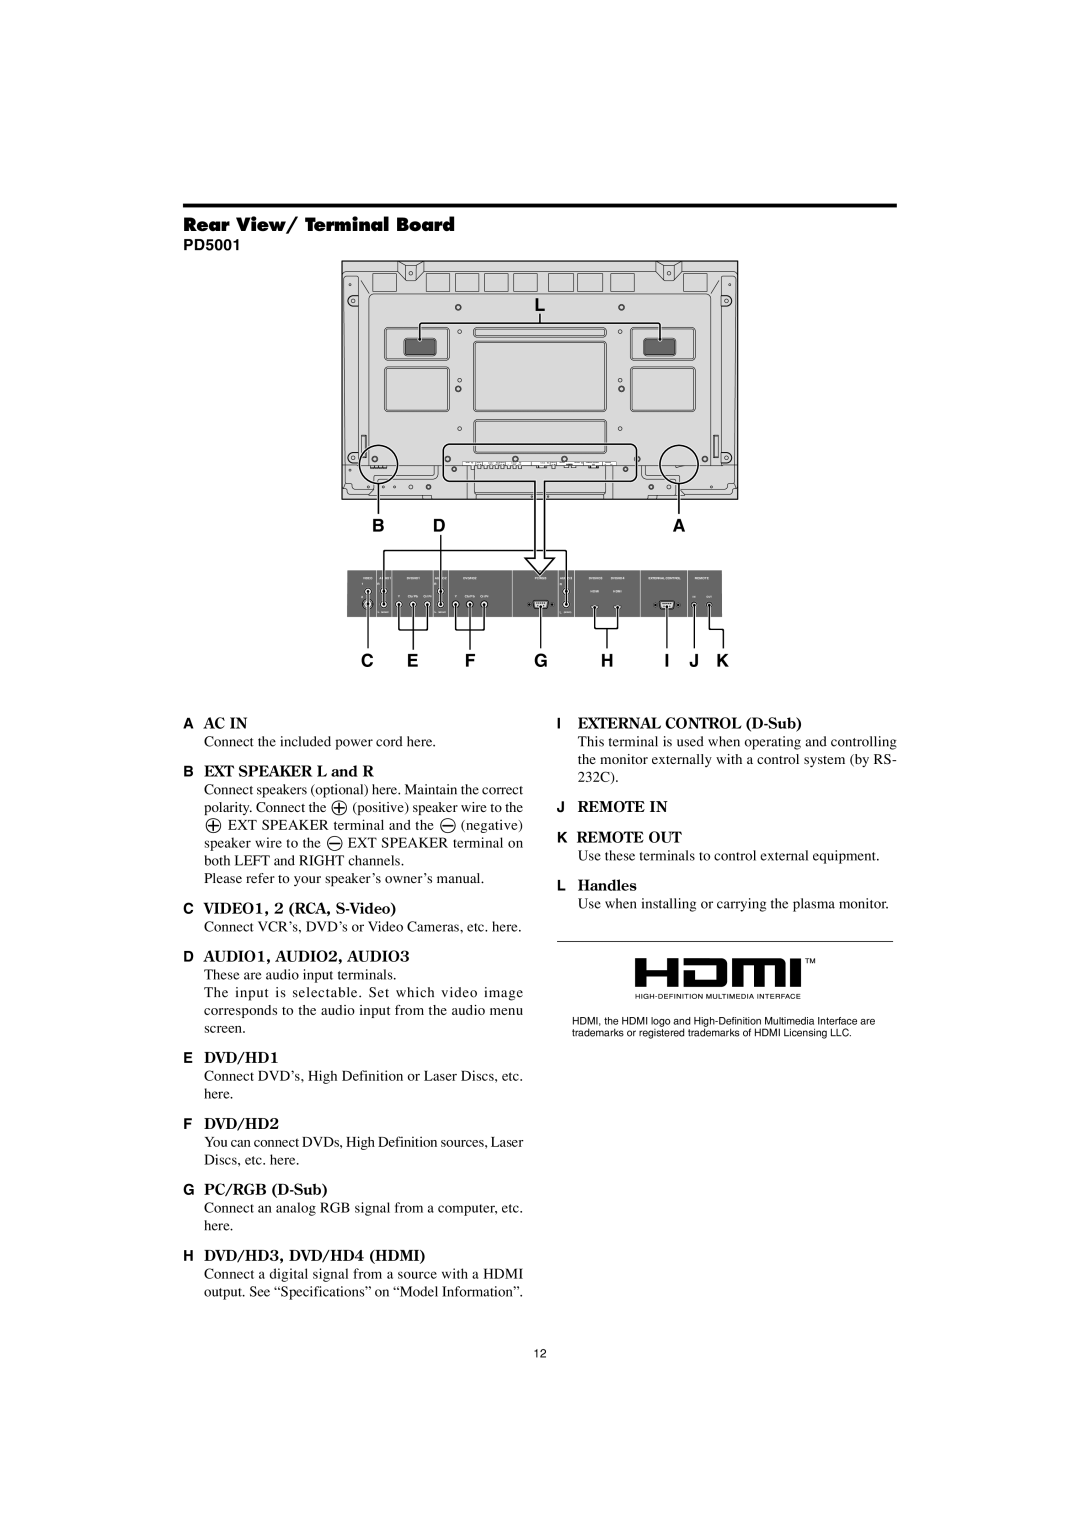 Marantz PD5001 manual Rear View/ Terminal Board, C E F G H I J K 